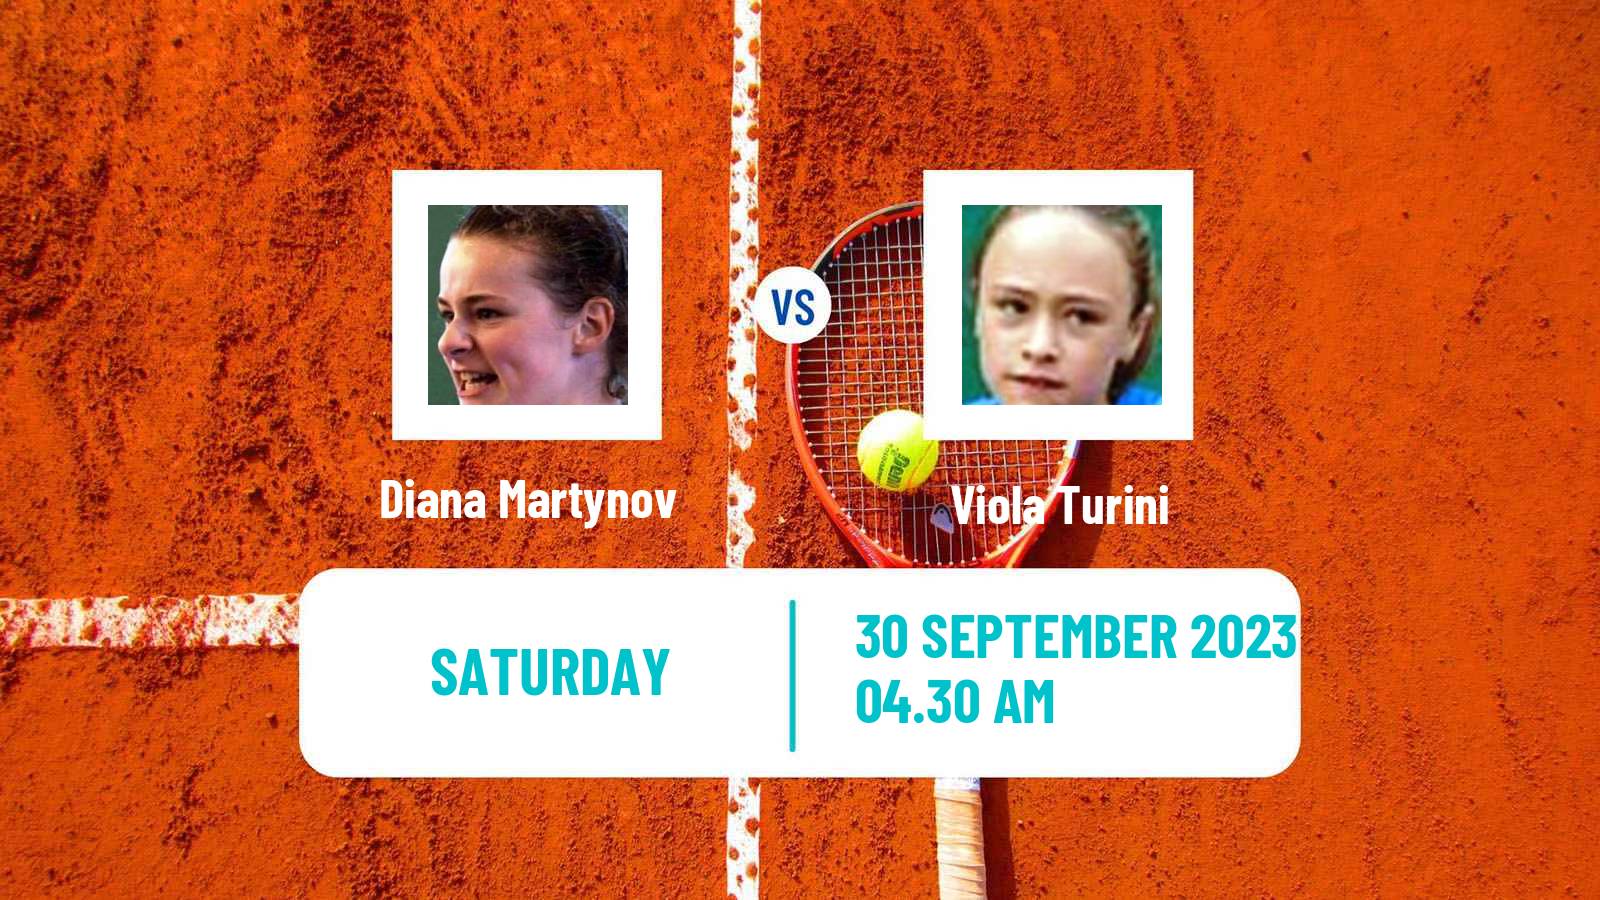 Tennis ITF W15 Monastir 34 Women Diana Martynov - Viola Turini